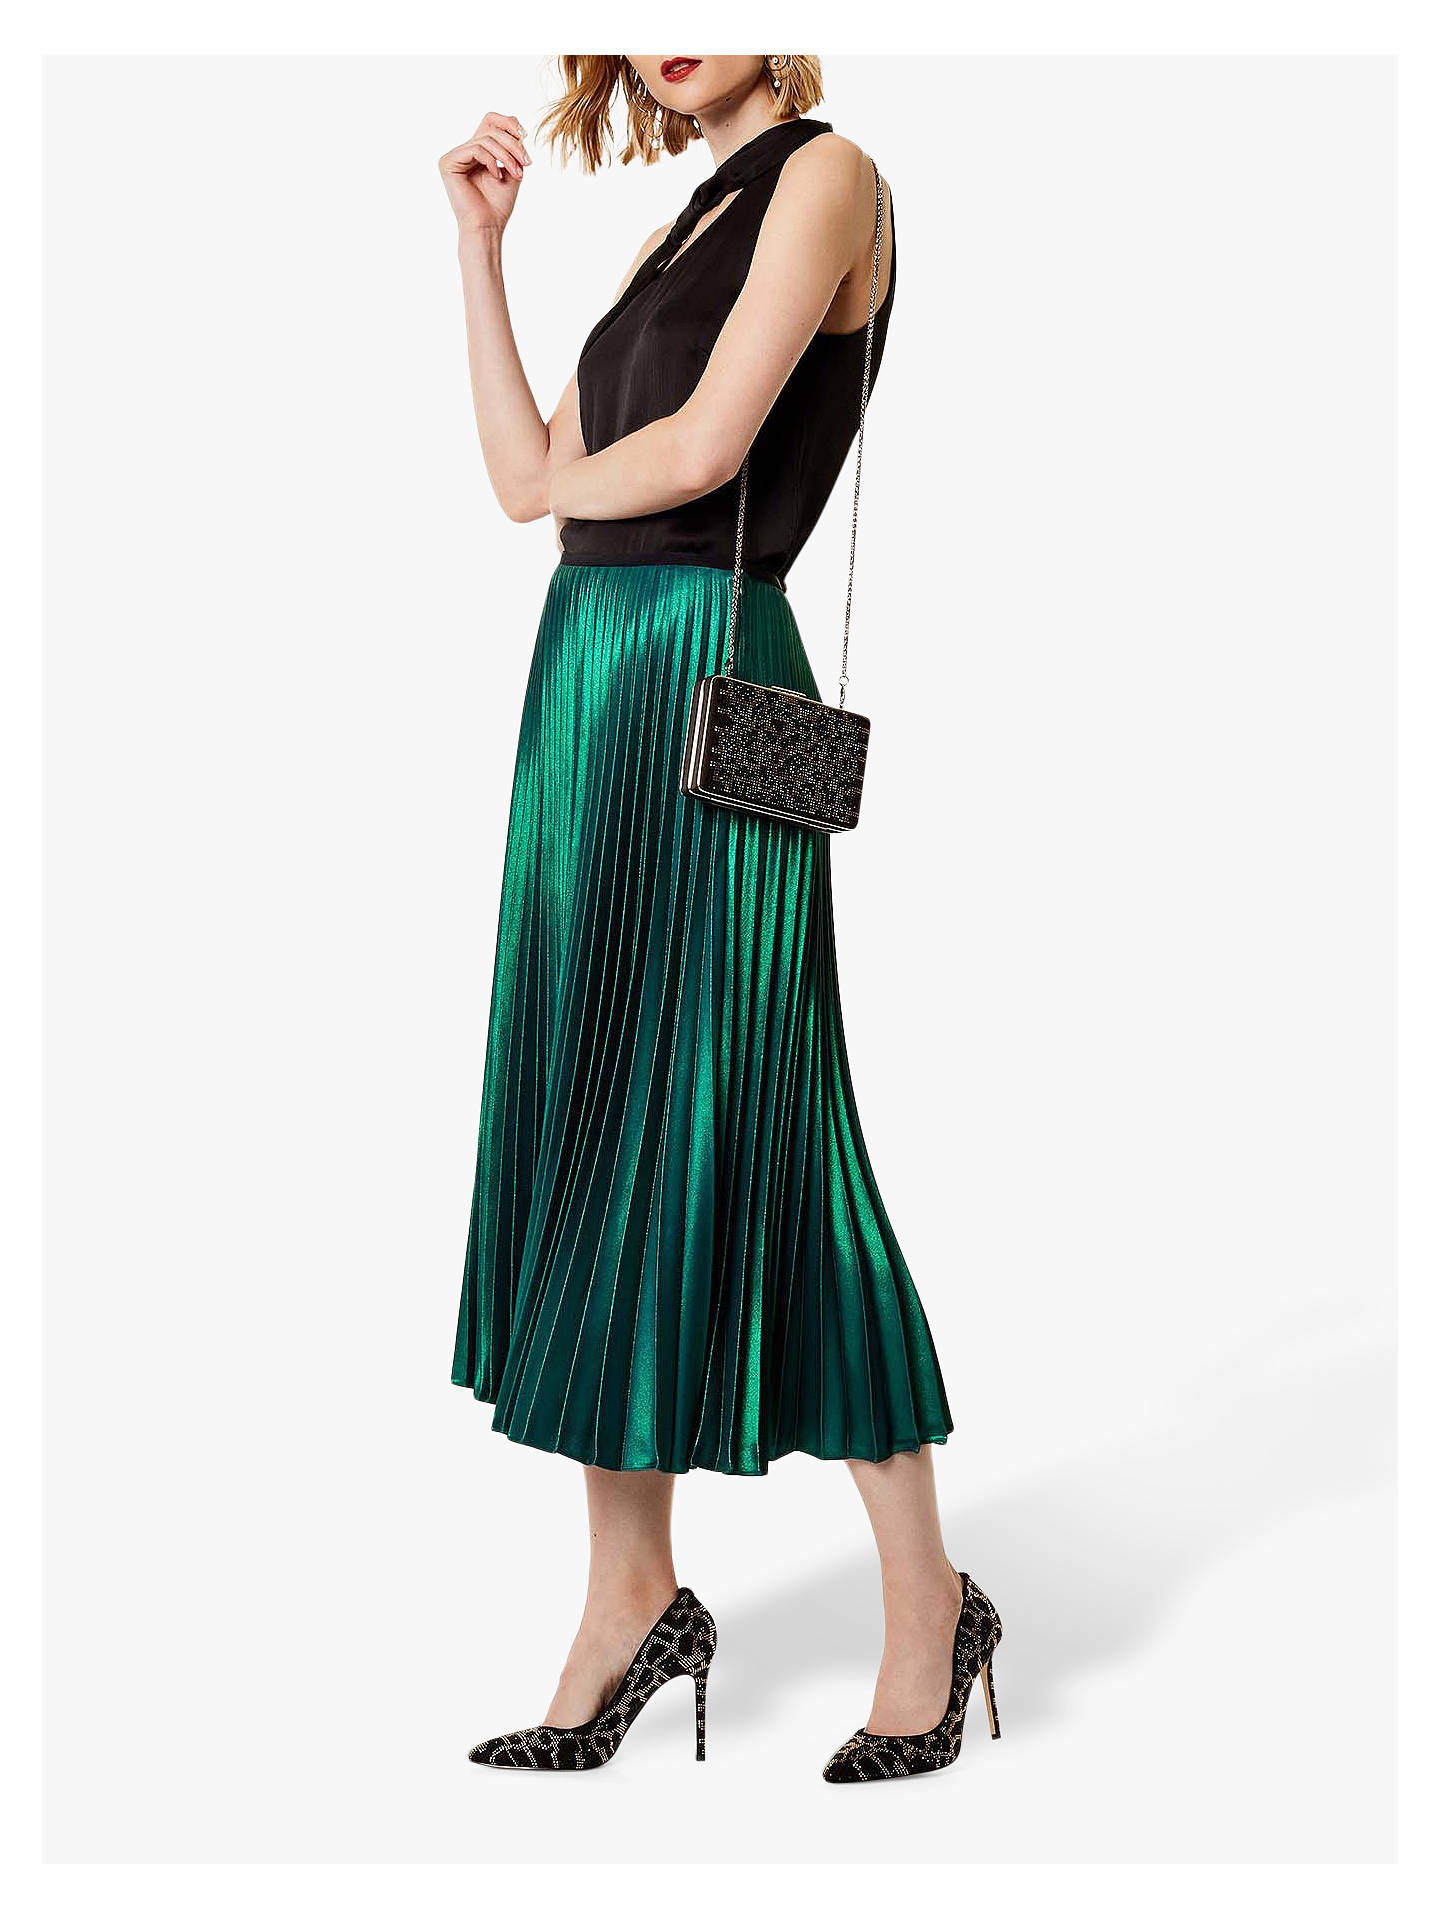 Karen Millen Metallic Pleated Skirt, Dark Green at John Lewis & Partners